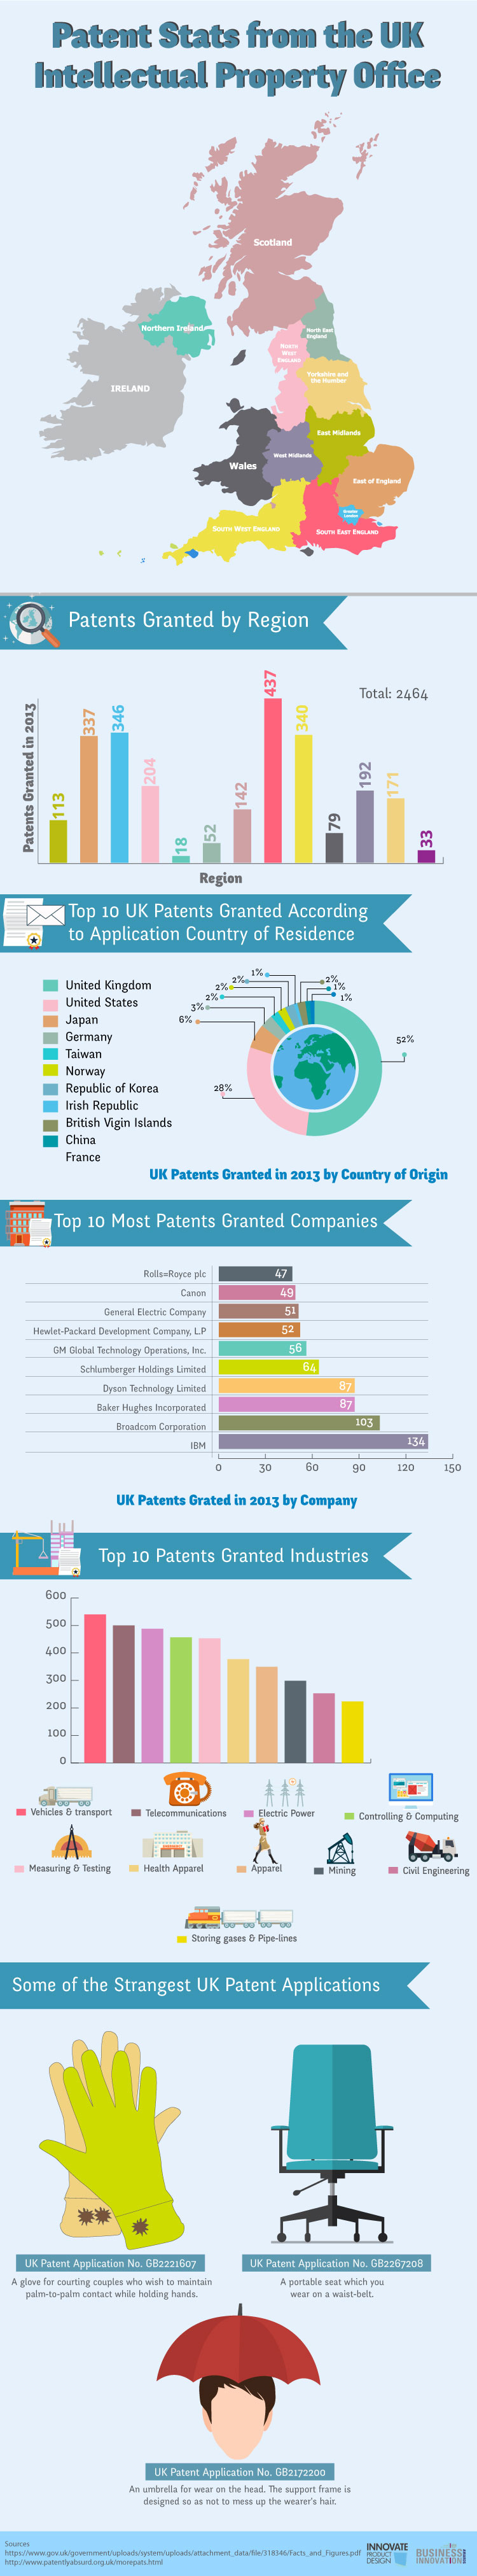 UK Intellectual Property Office (IPO) Patent Stats